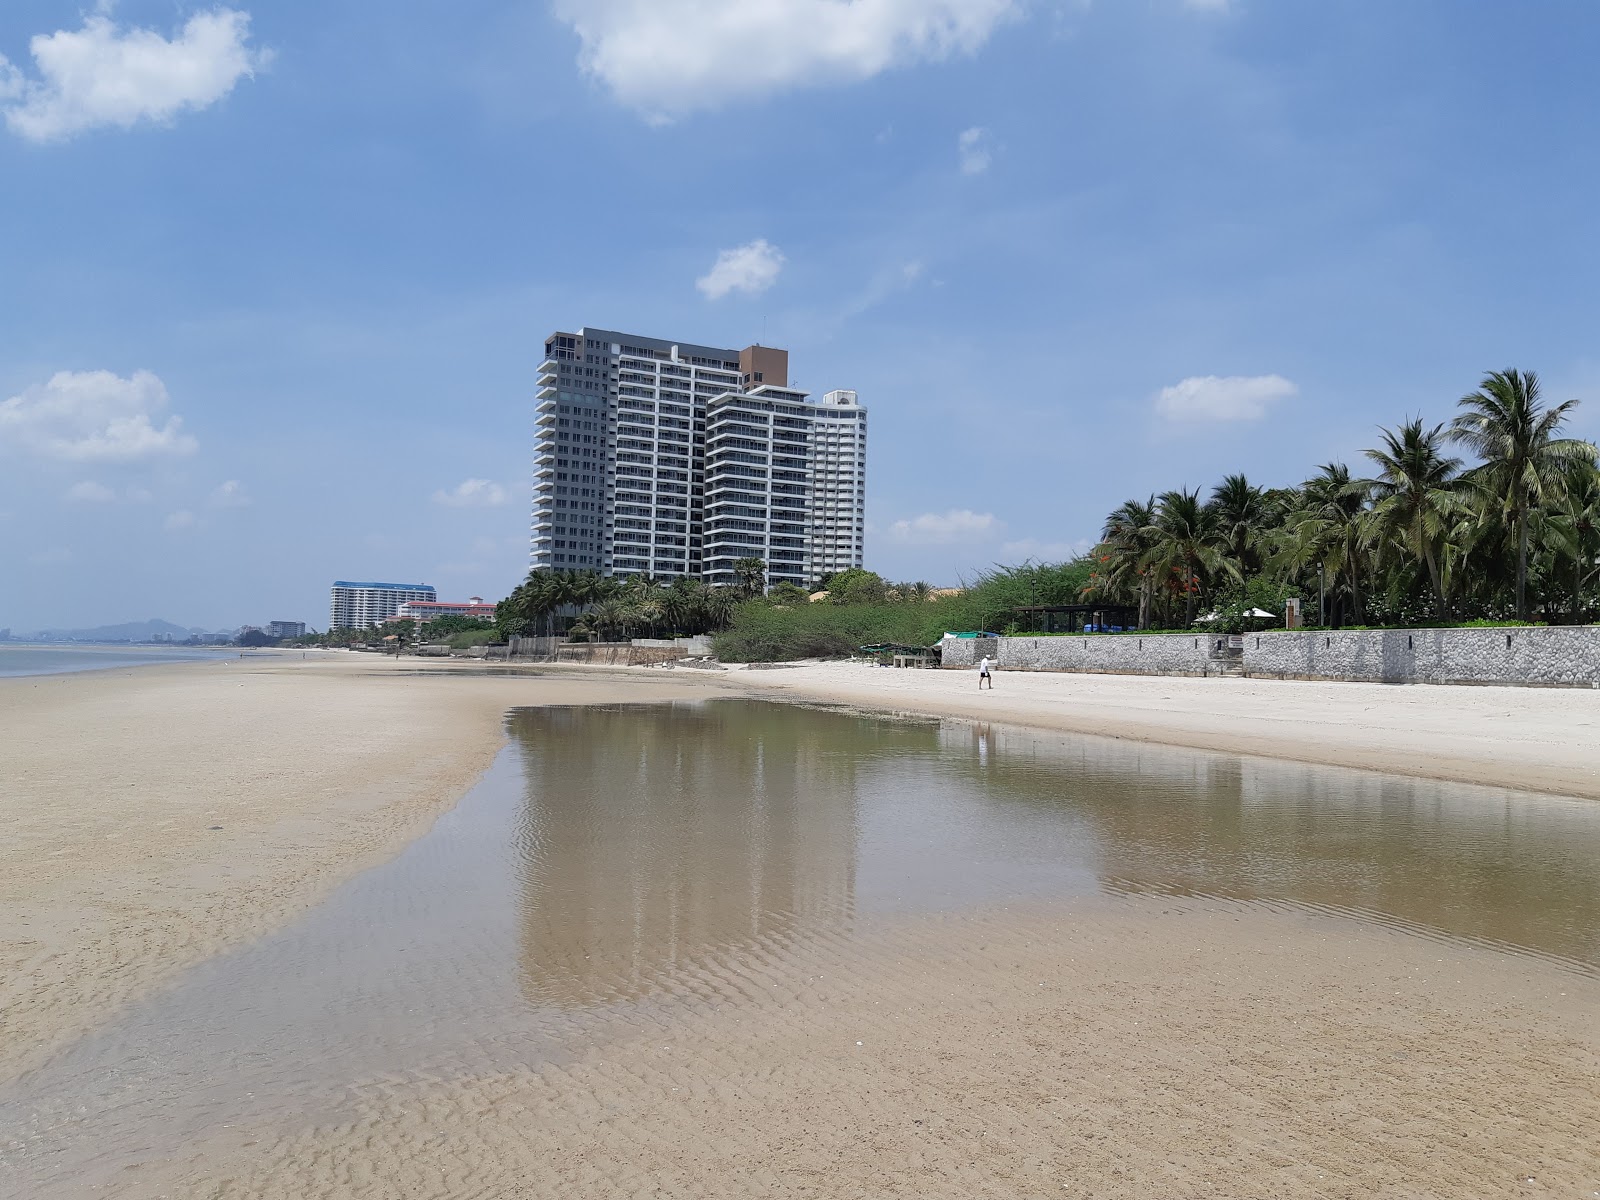 Foto av Q Seaside Huahin Beach delvis hotellområde